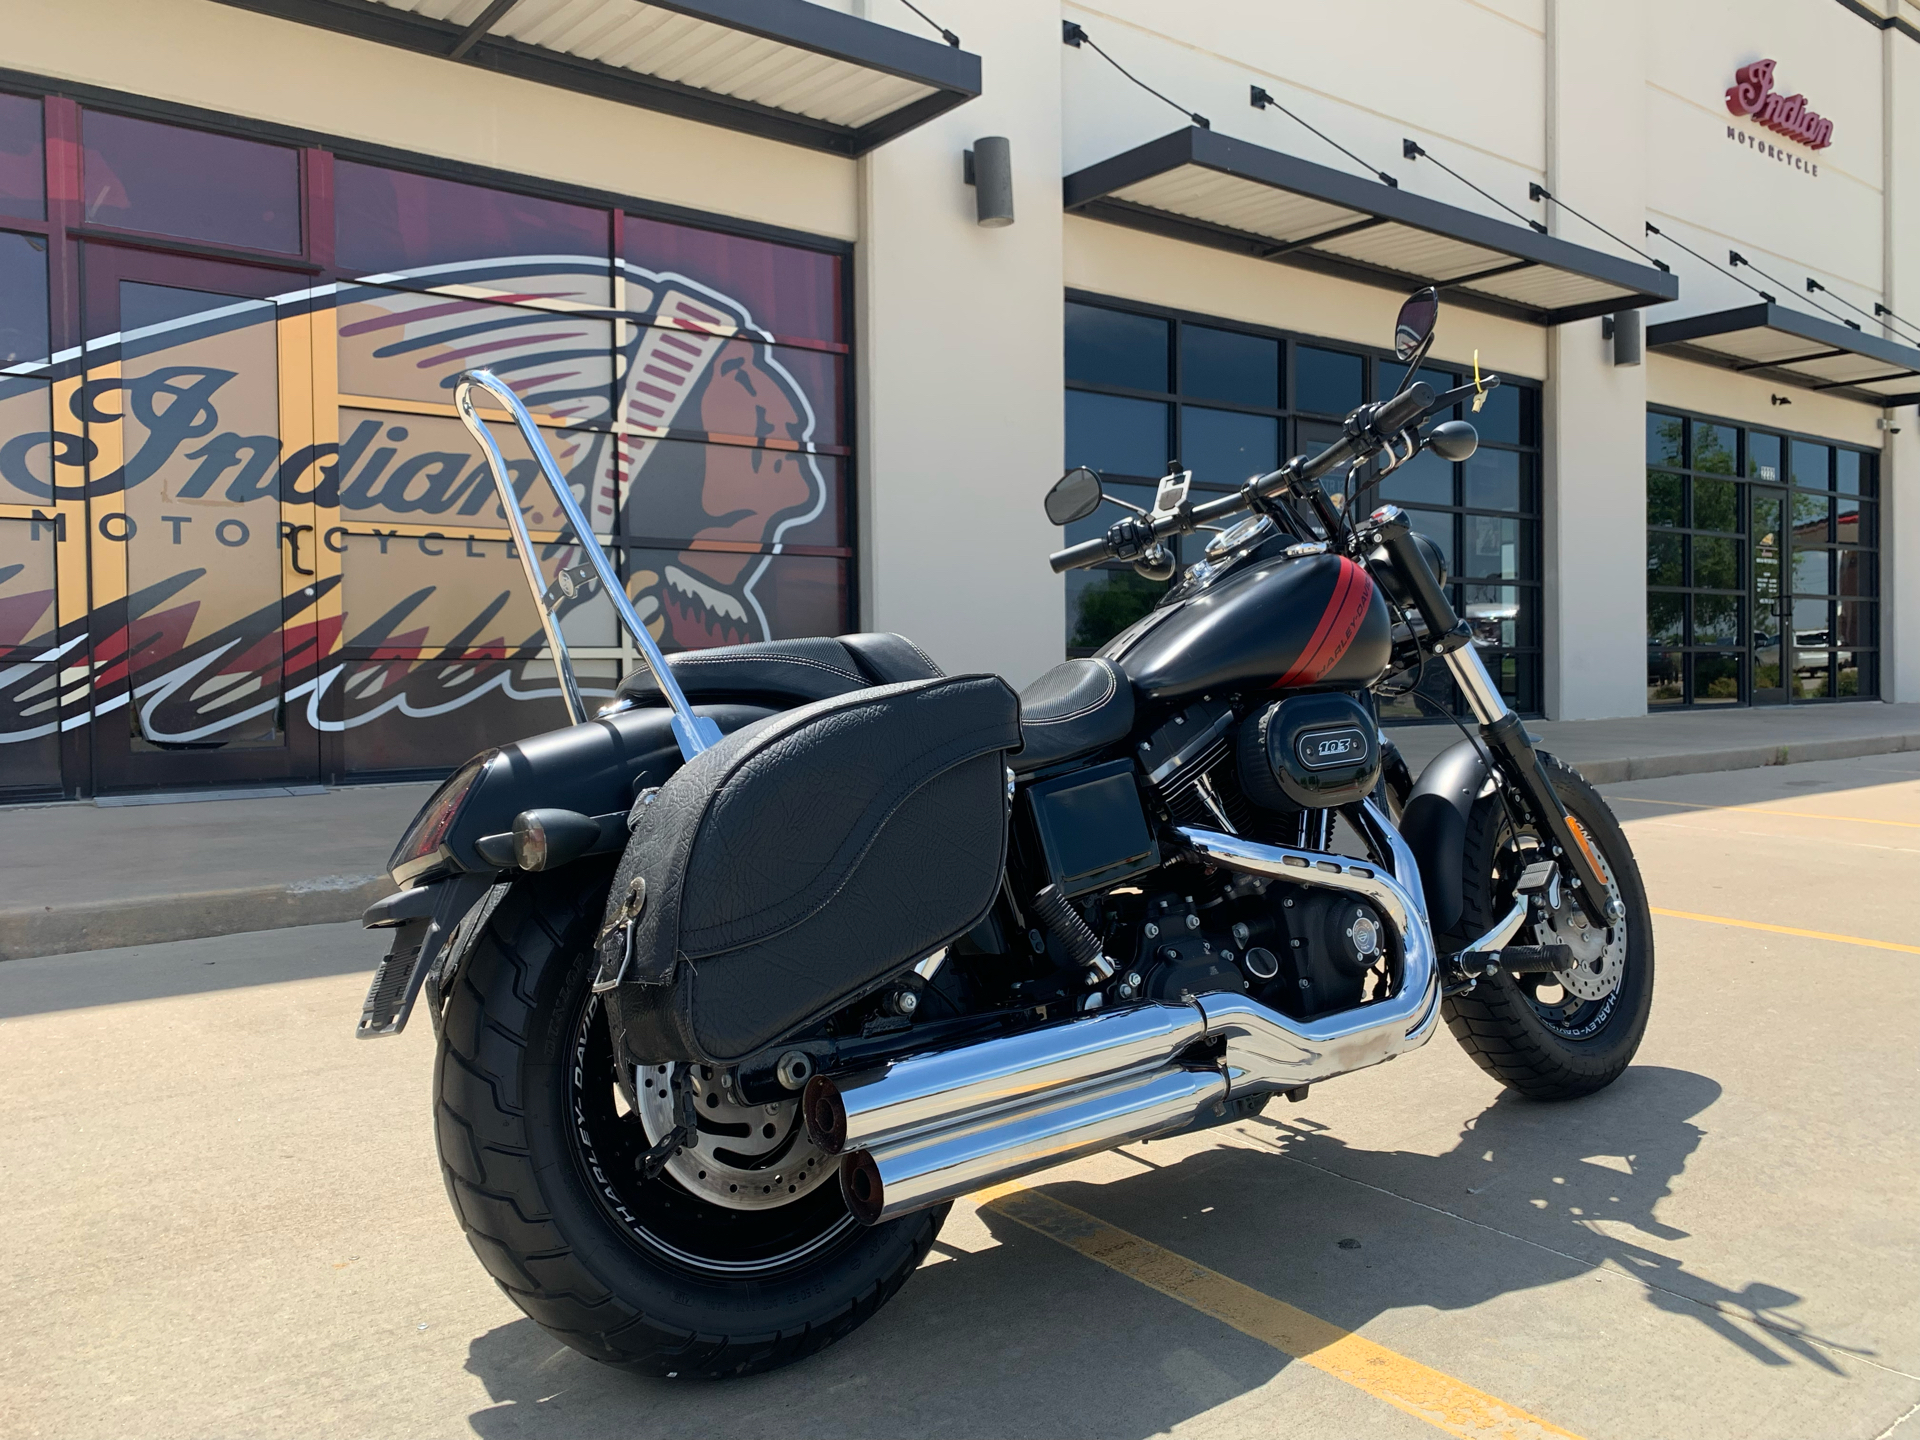 2017 Harley-Davidson Fat Bob in Norman, Oklahoma - Photo 8